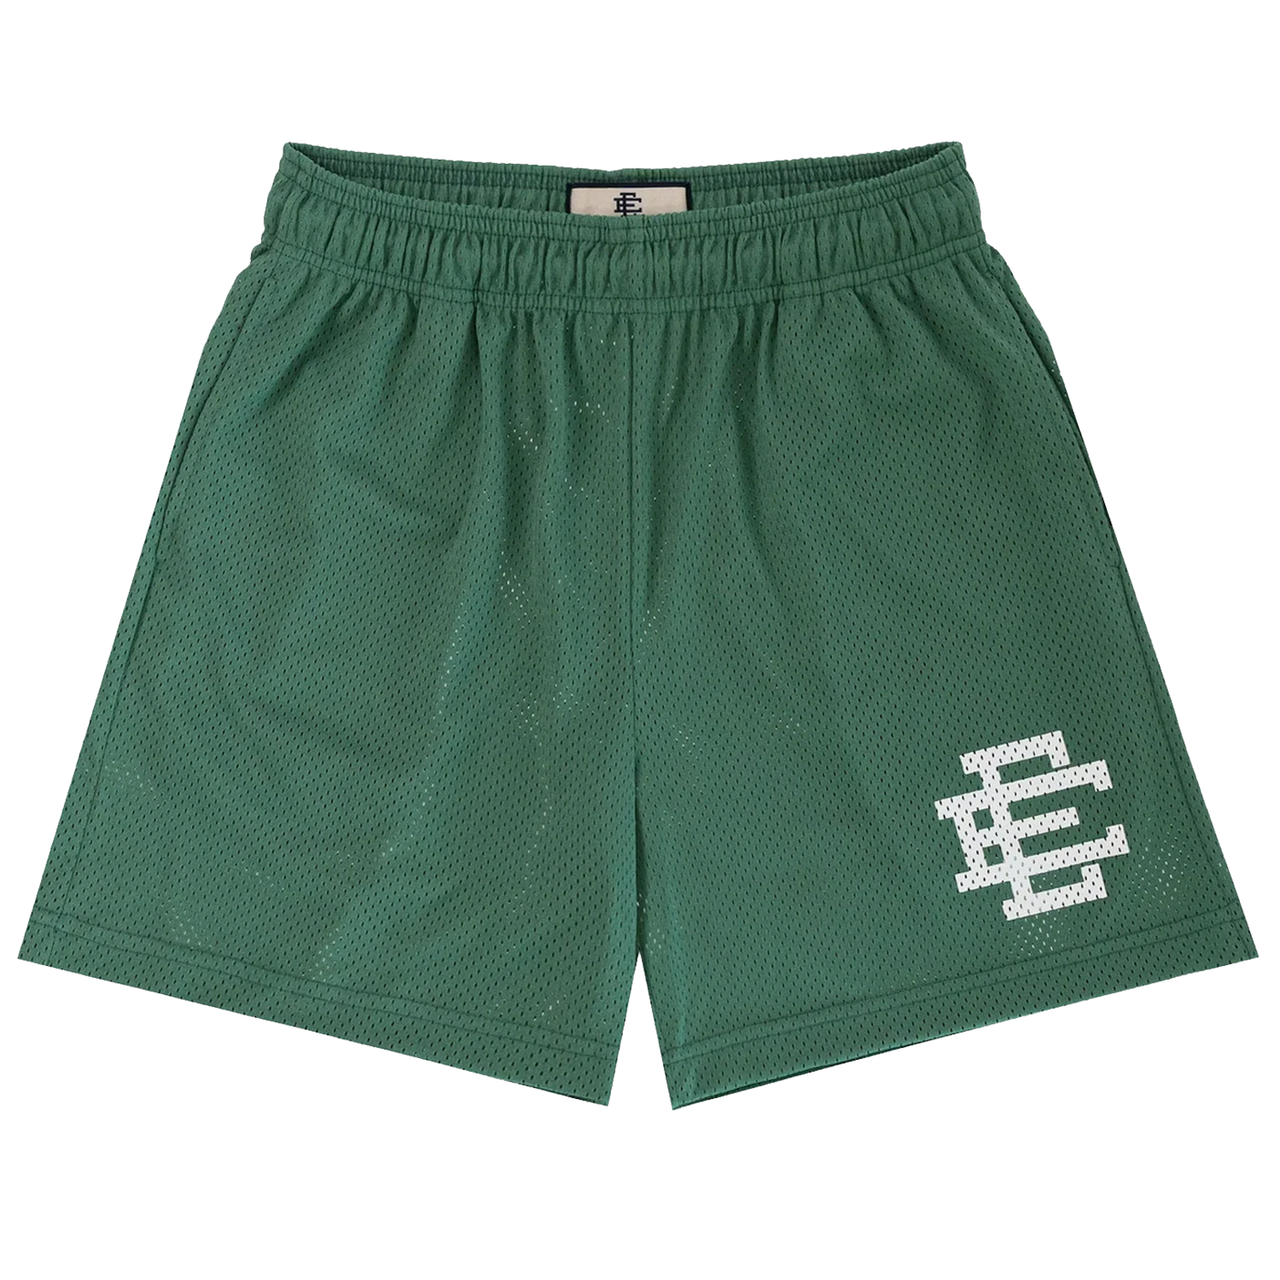 Eric Emanuel Basic Shorts Green White